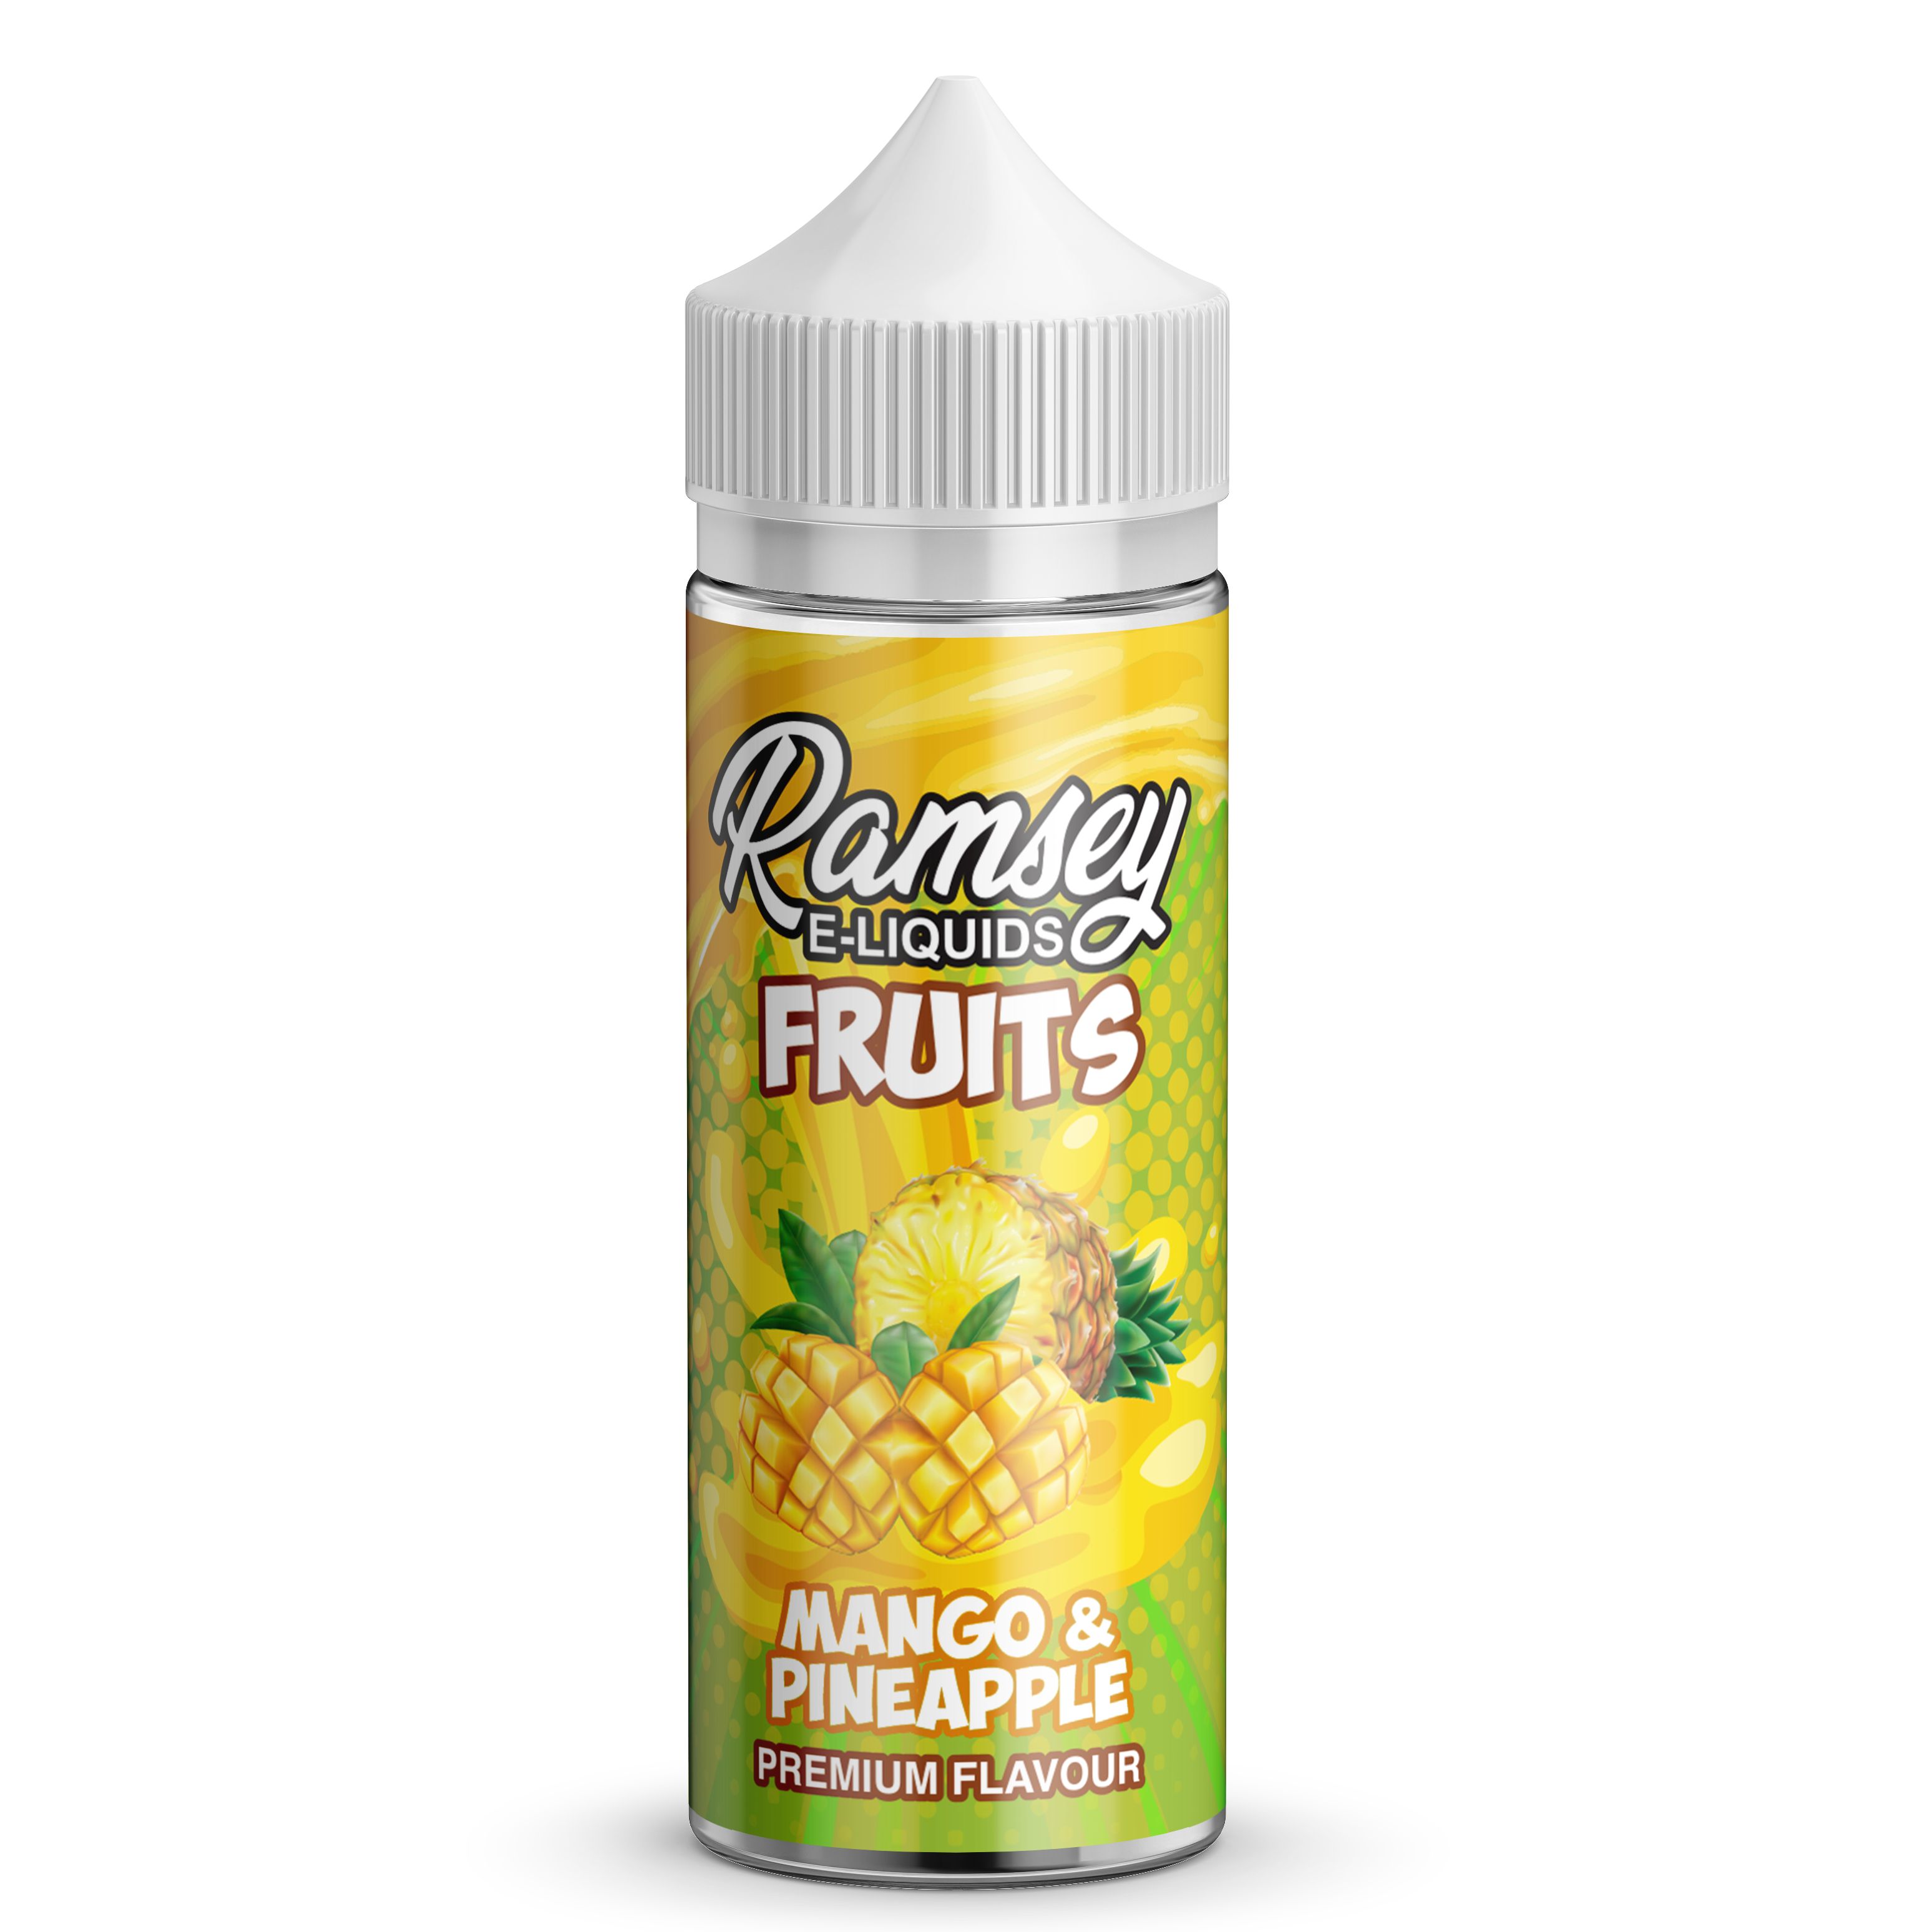 Ramsey E-Liquids Fruits Mango Pineapple 0mg 100ml Shortfill E-Liquid